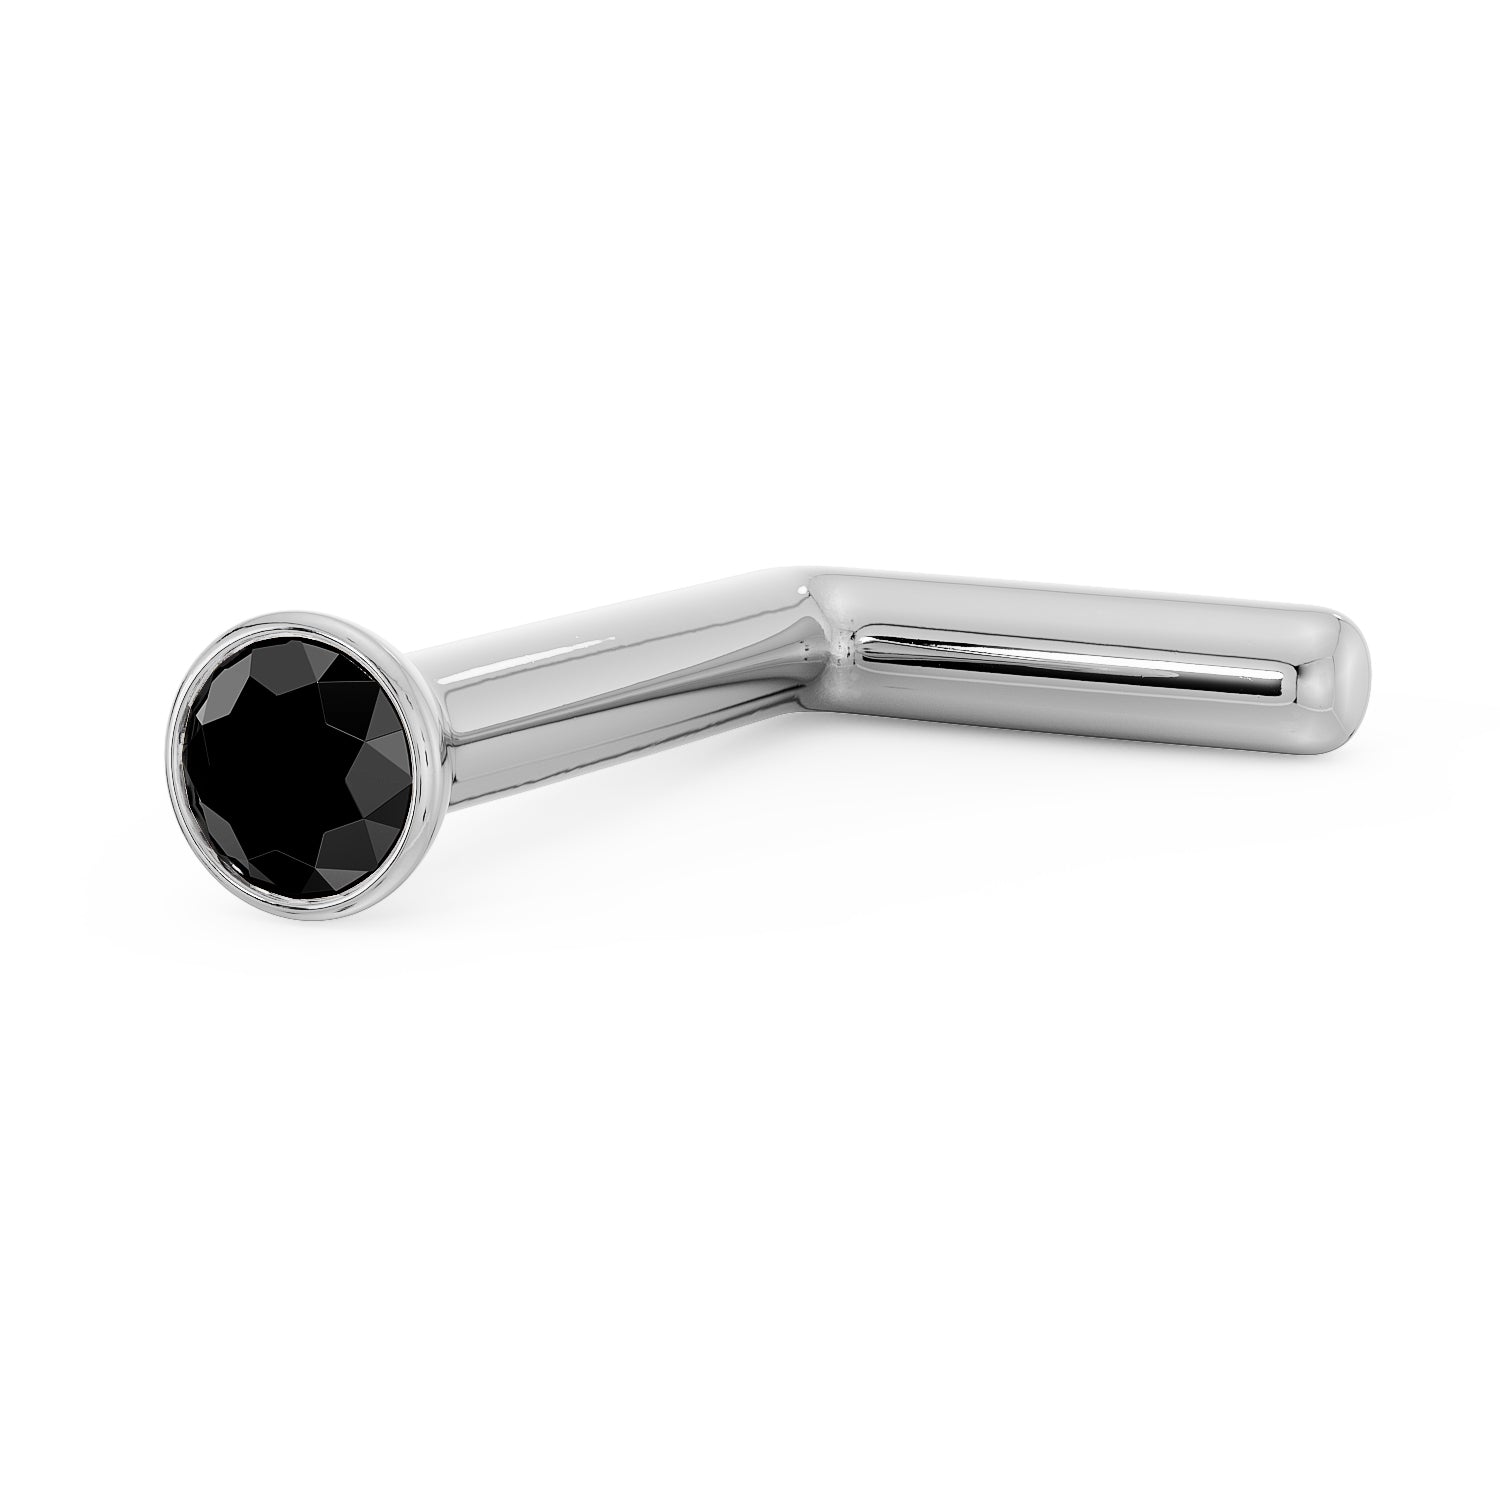 1.5mm Black Diamond Bezel Nose Ring Stud